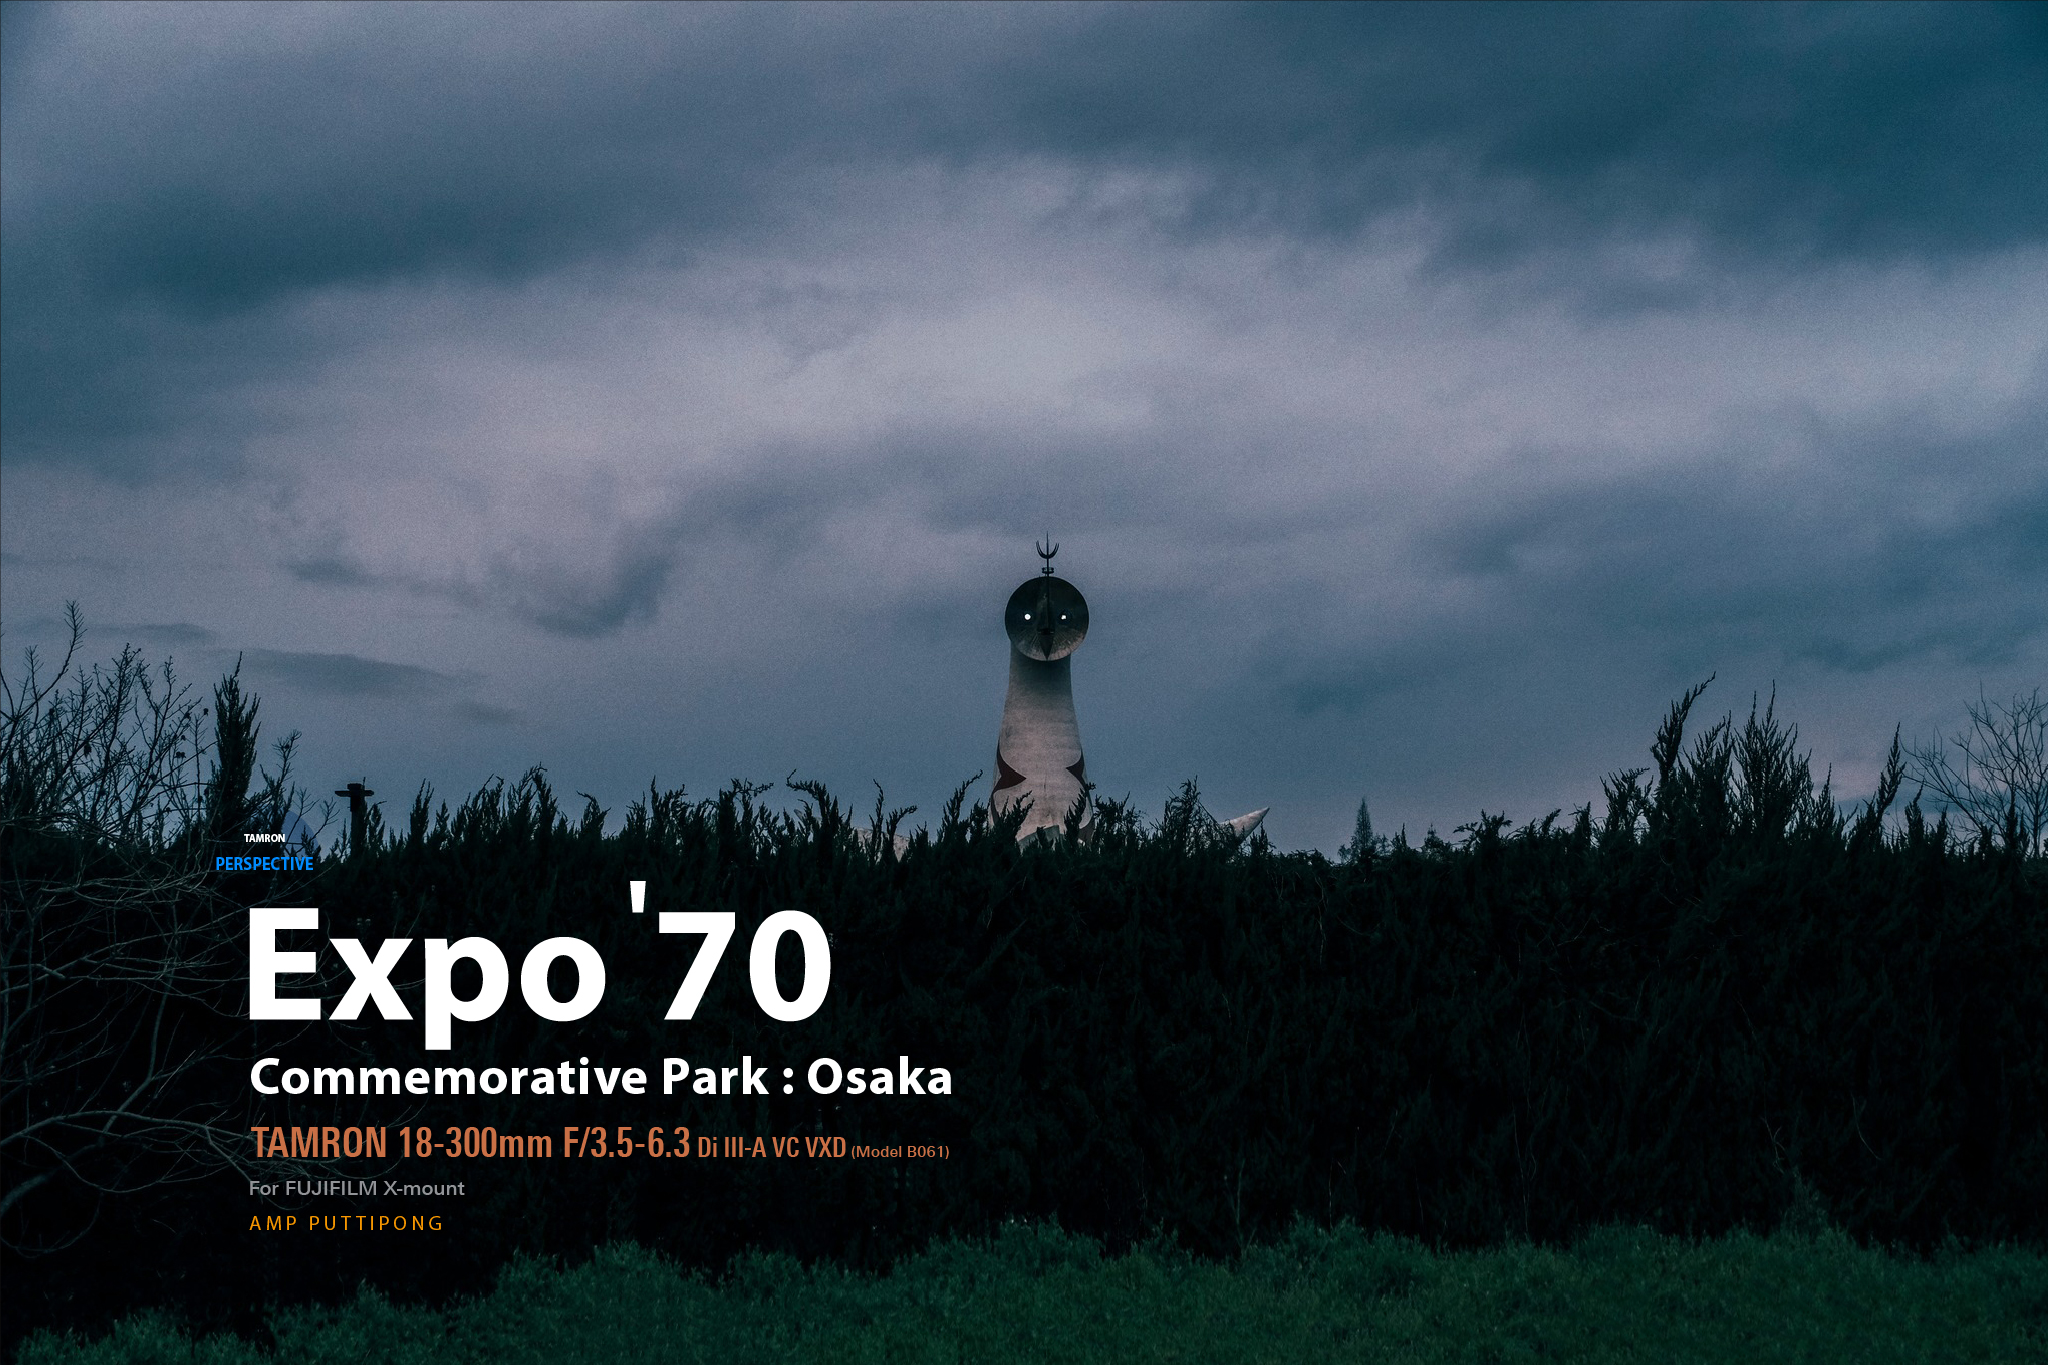 TAMRON PERSPECTIVE : Expo ’70 Commemorative Park